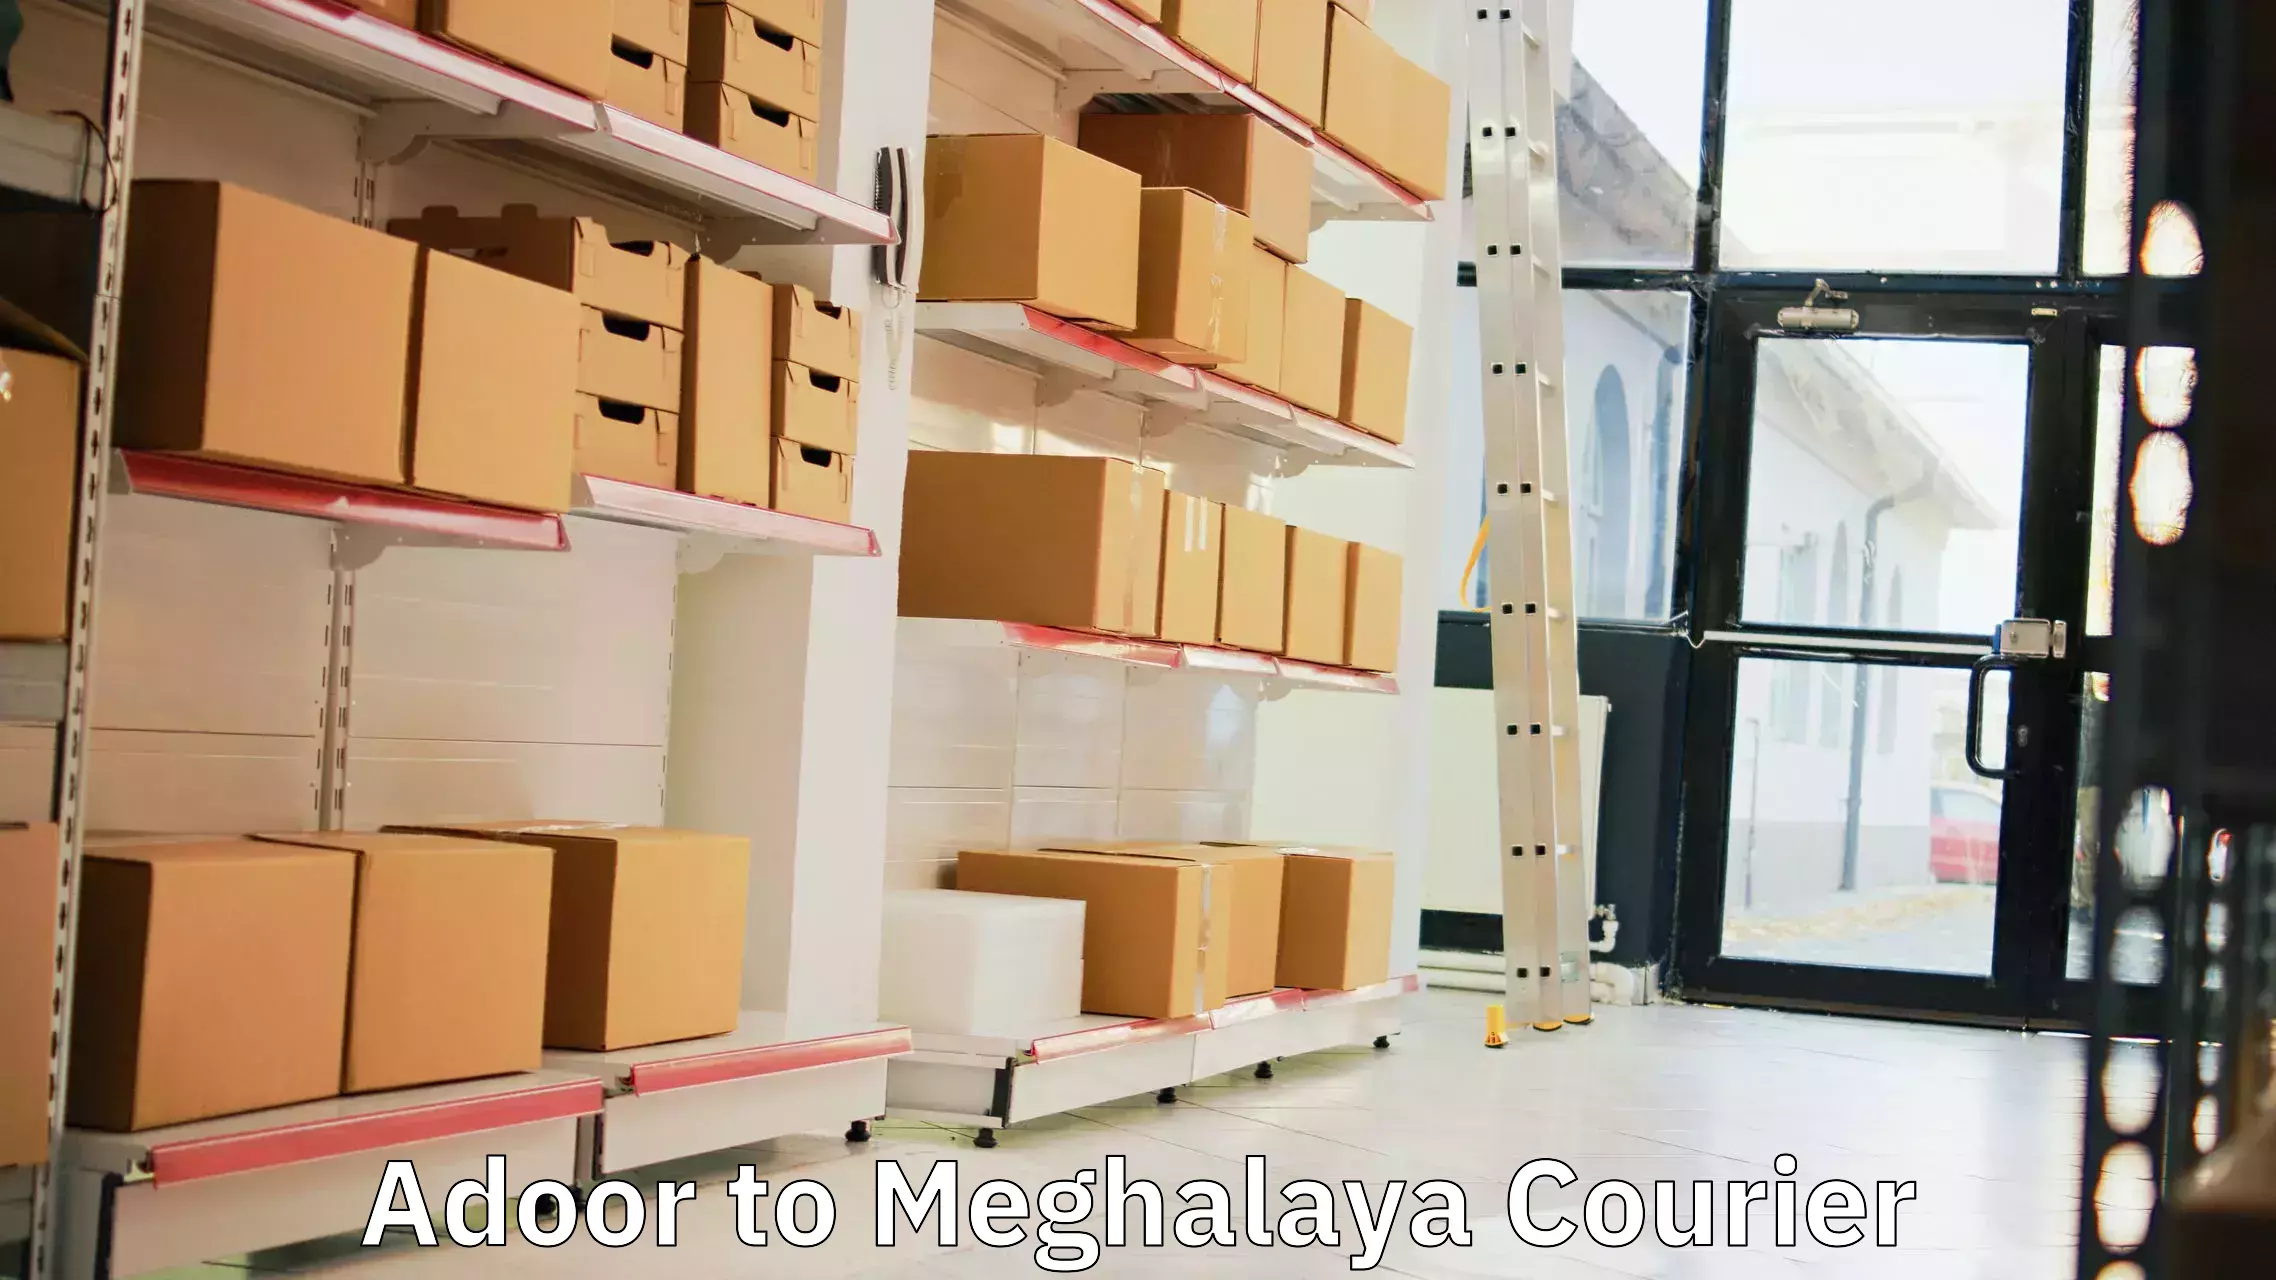 Delivery service partnership Adoor to Meghalaya